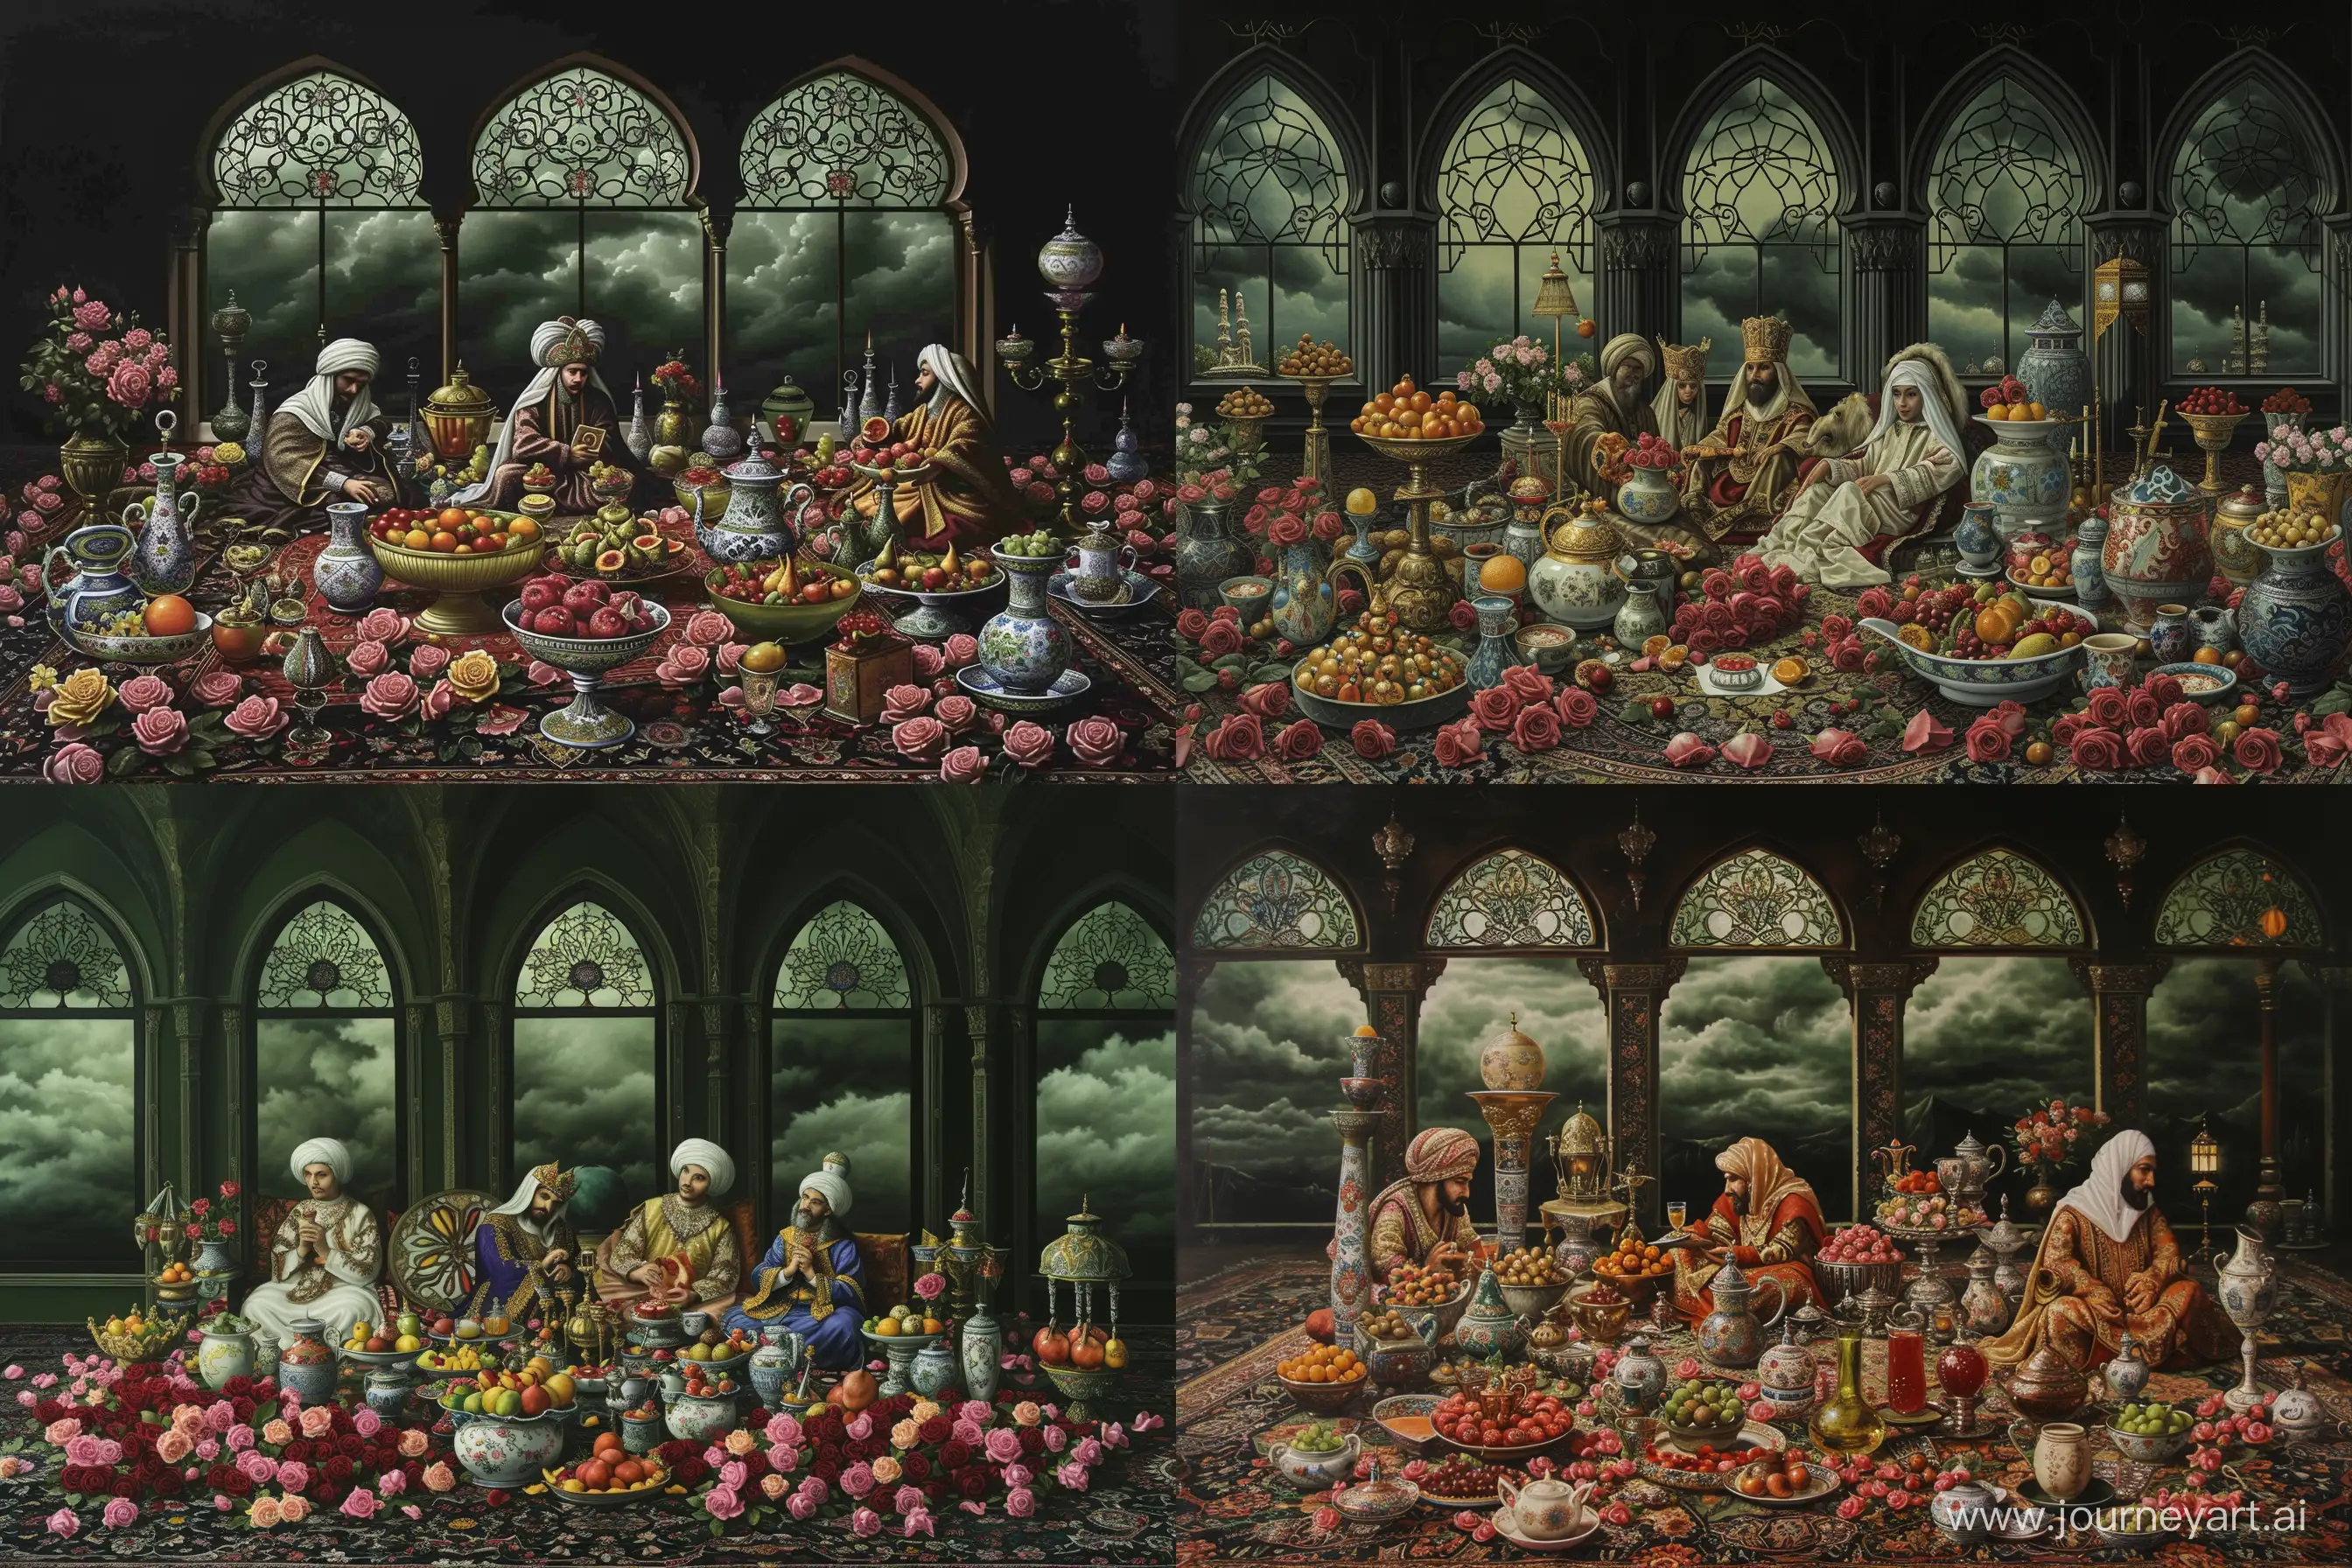 Medieval-European-Princes-in-Opulent-Arabian-Setting-with-Iznik-Ceramics-and-Rose-Flowers